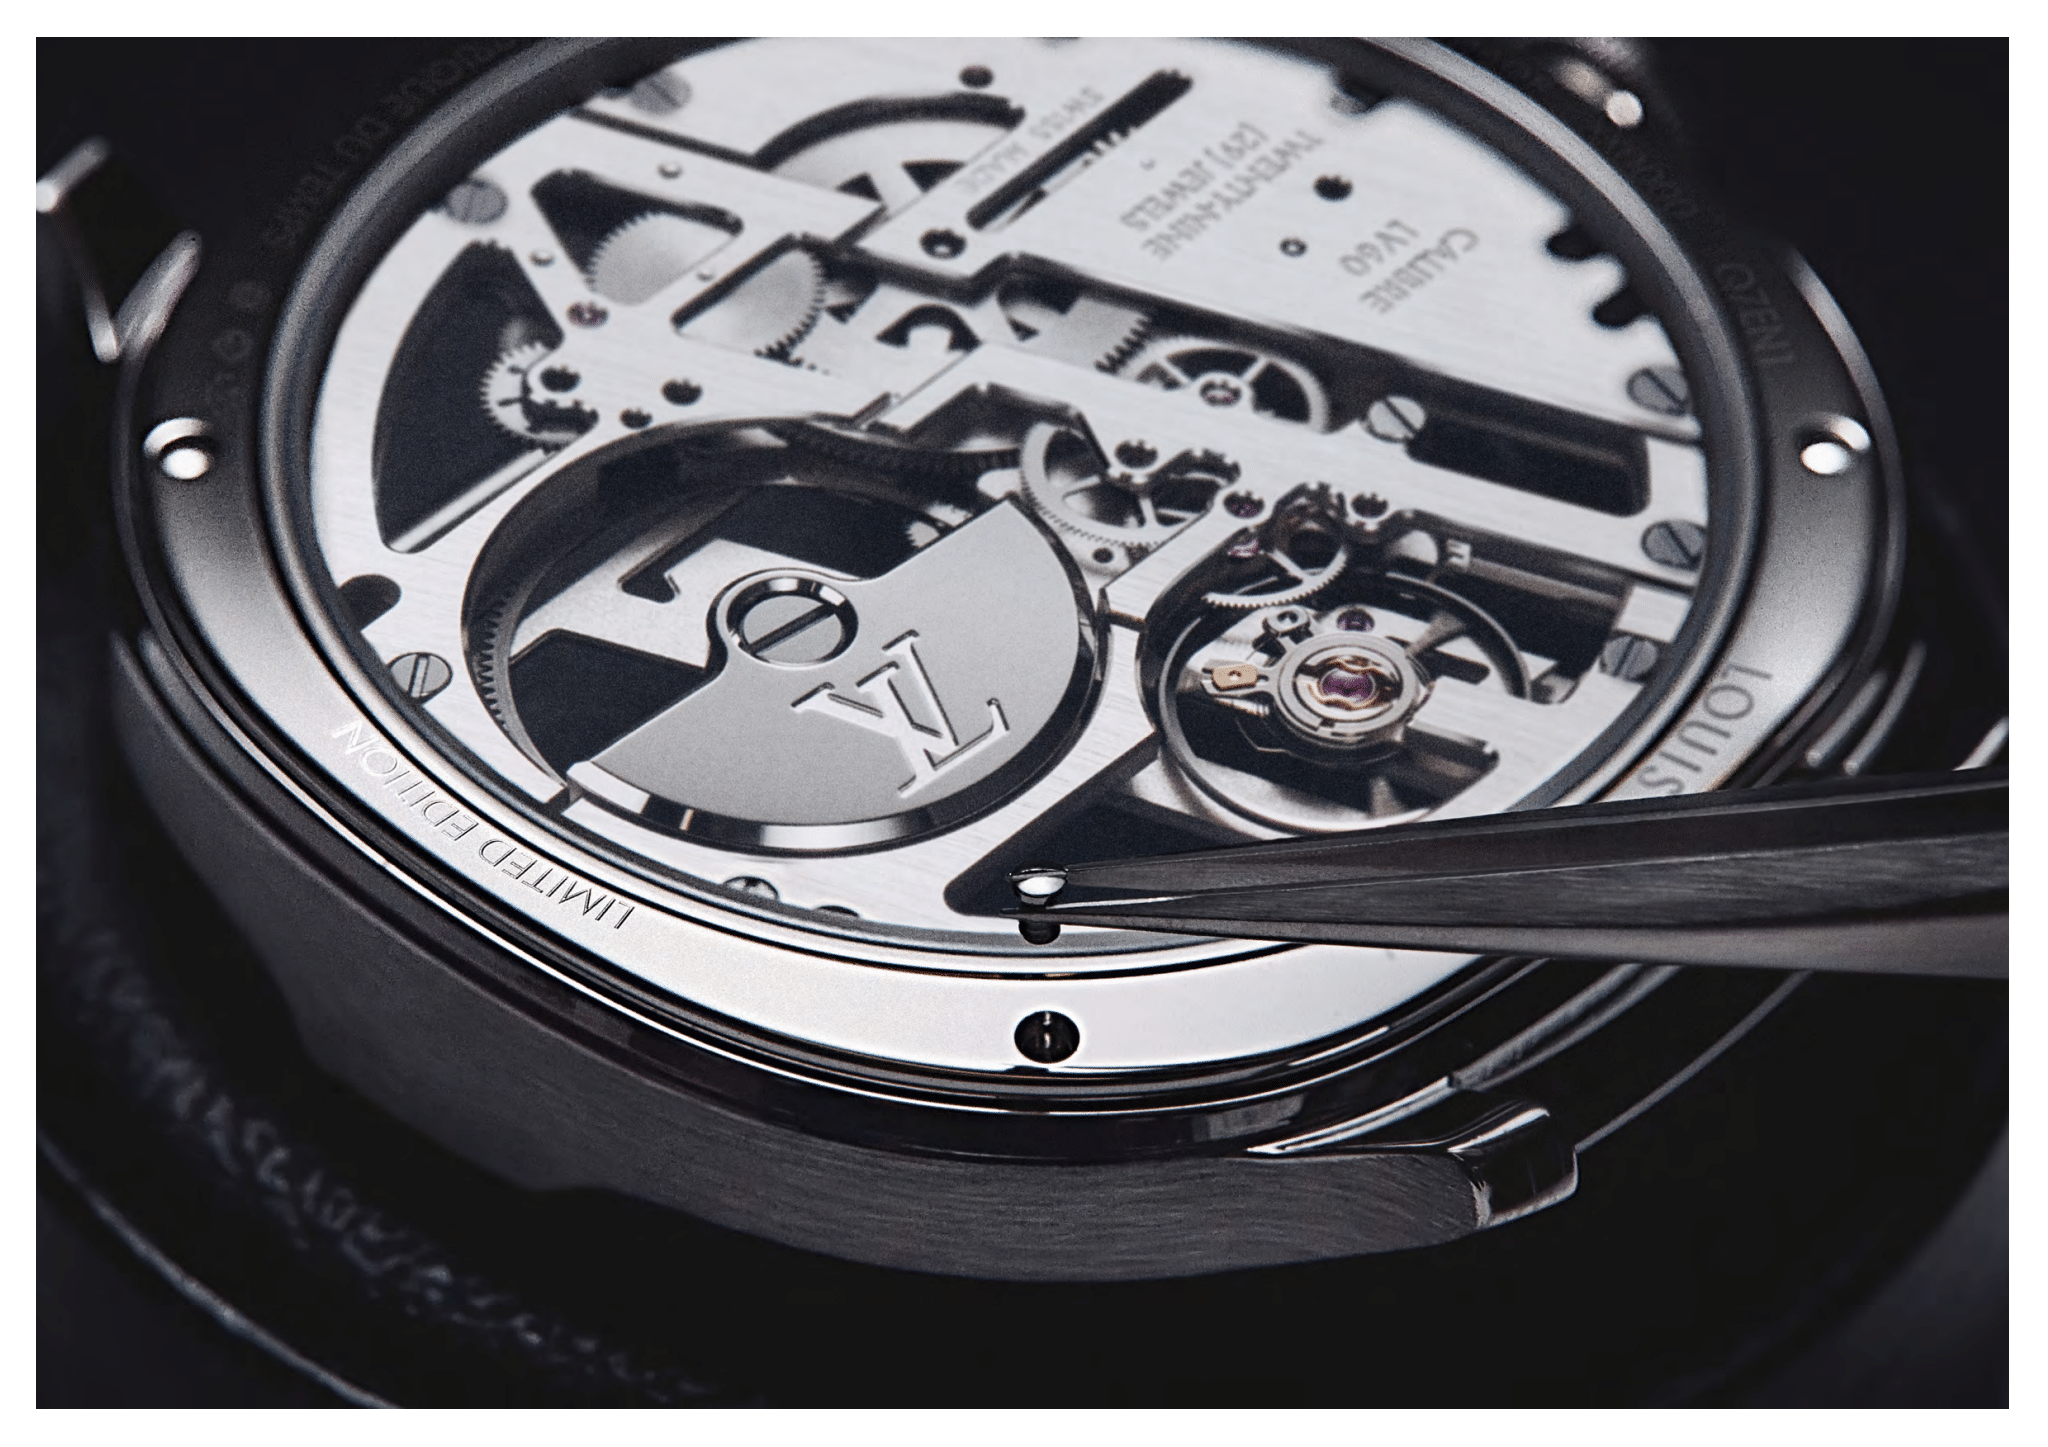 Ag9OSqnw 1 - Louis Vuitton präsentiert das neue limitierte Uhrenmodell Voyager Skeleton